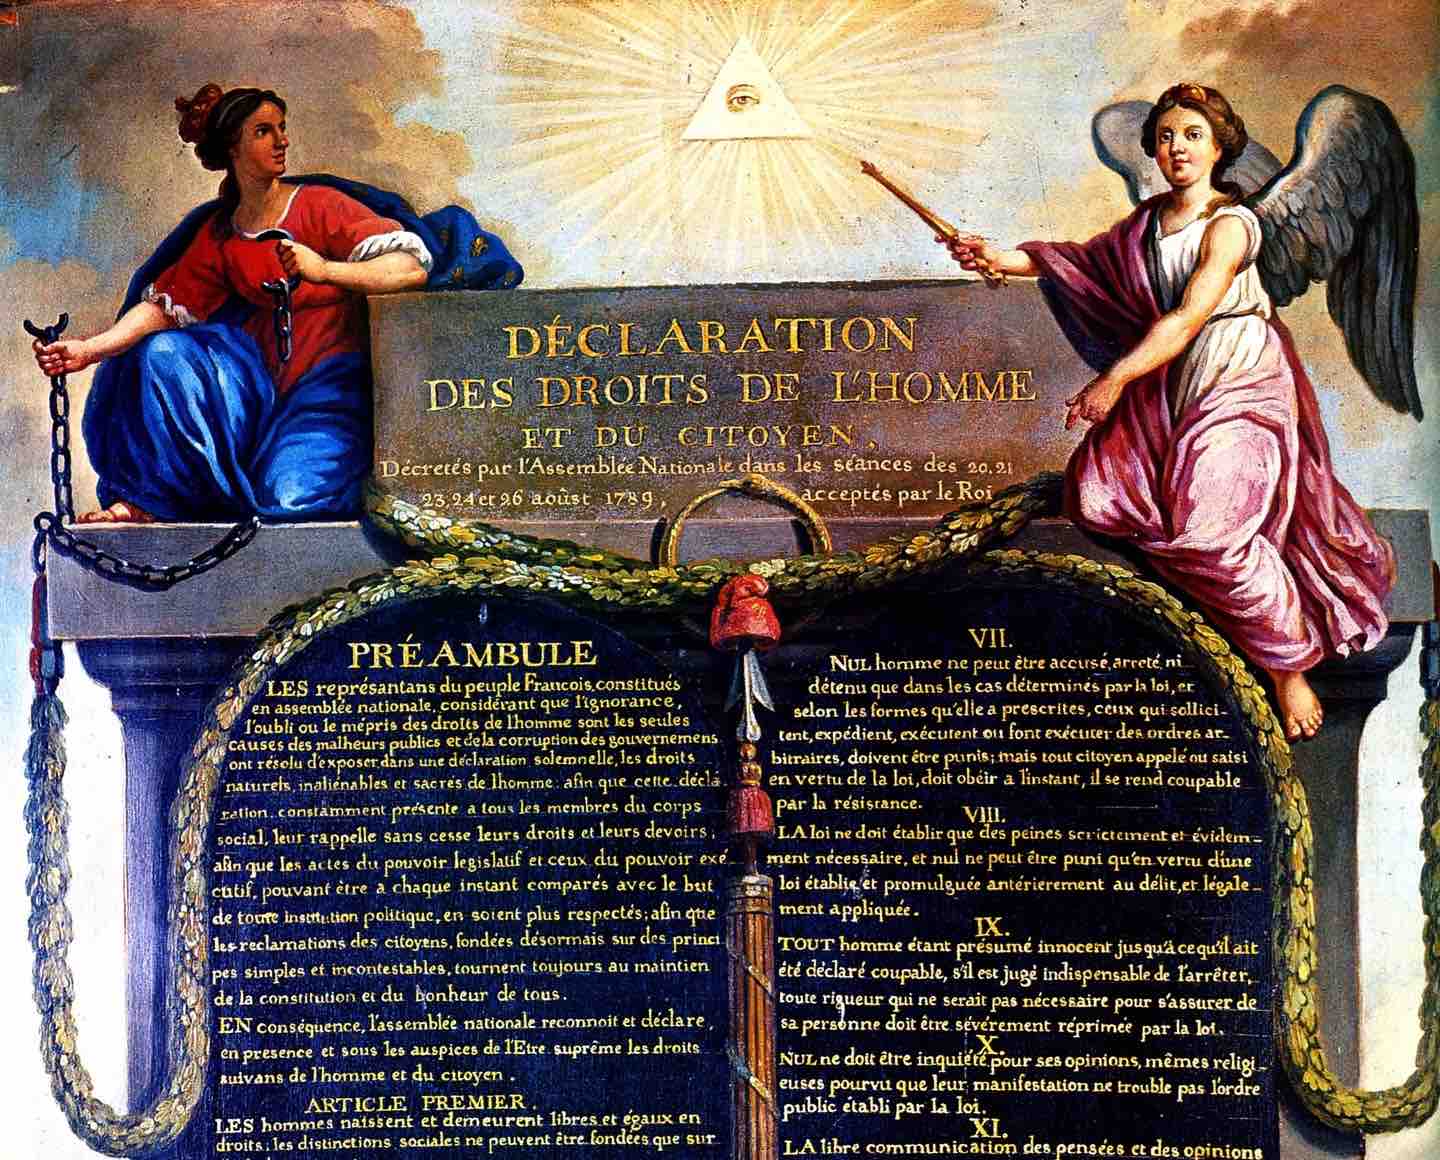  https://fr.wikipedia.org/wiki/... (Déclaration des droits...) 